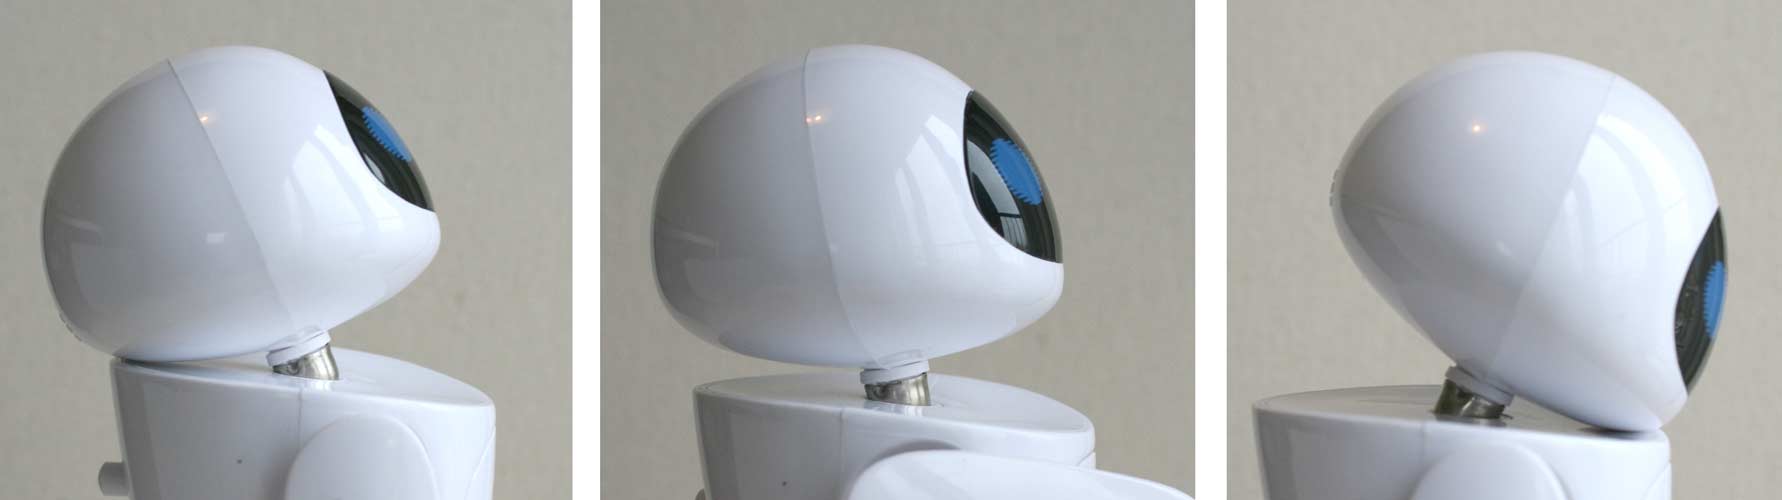 EVE Construct-a-Bot (Wall-E 2008)